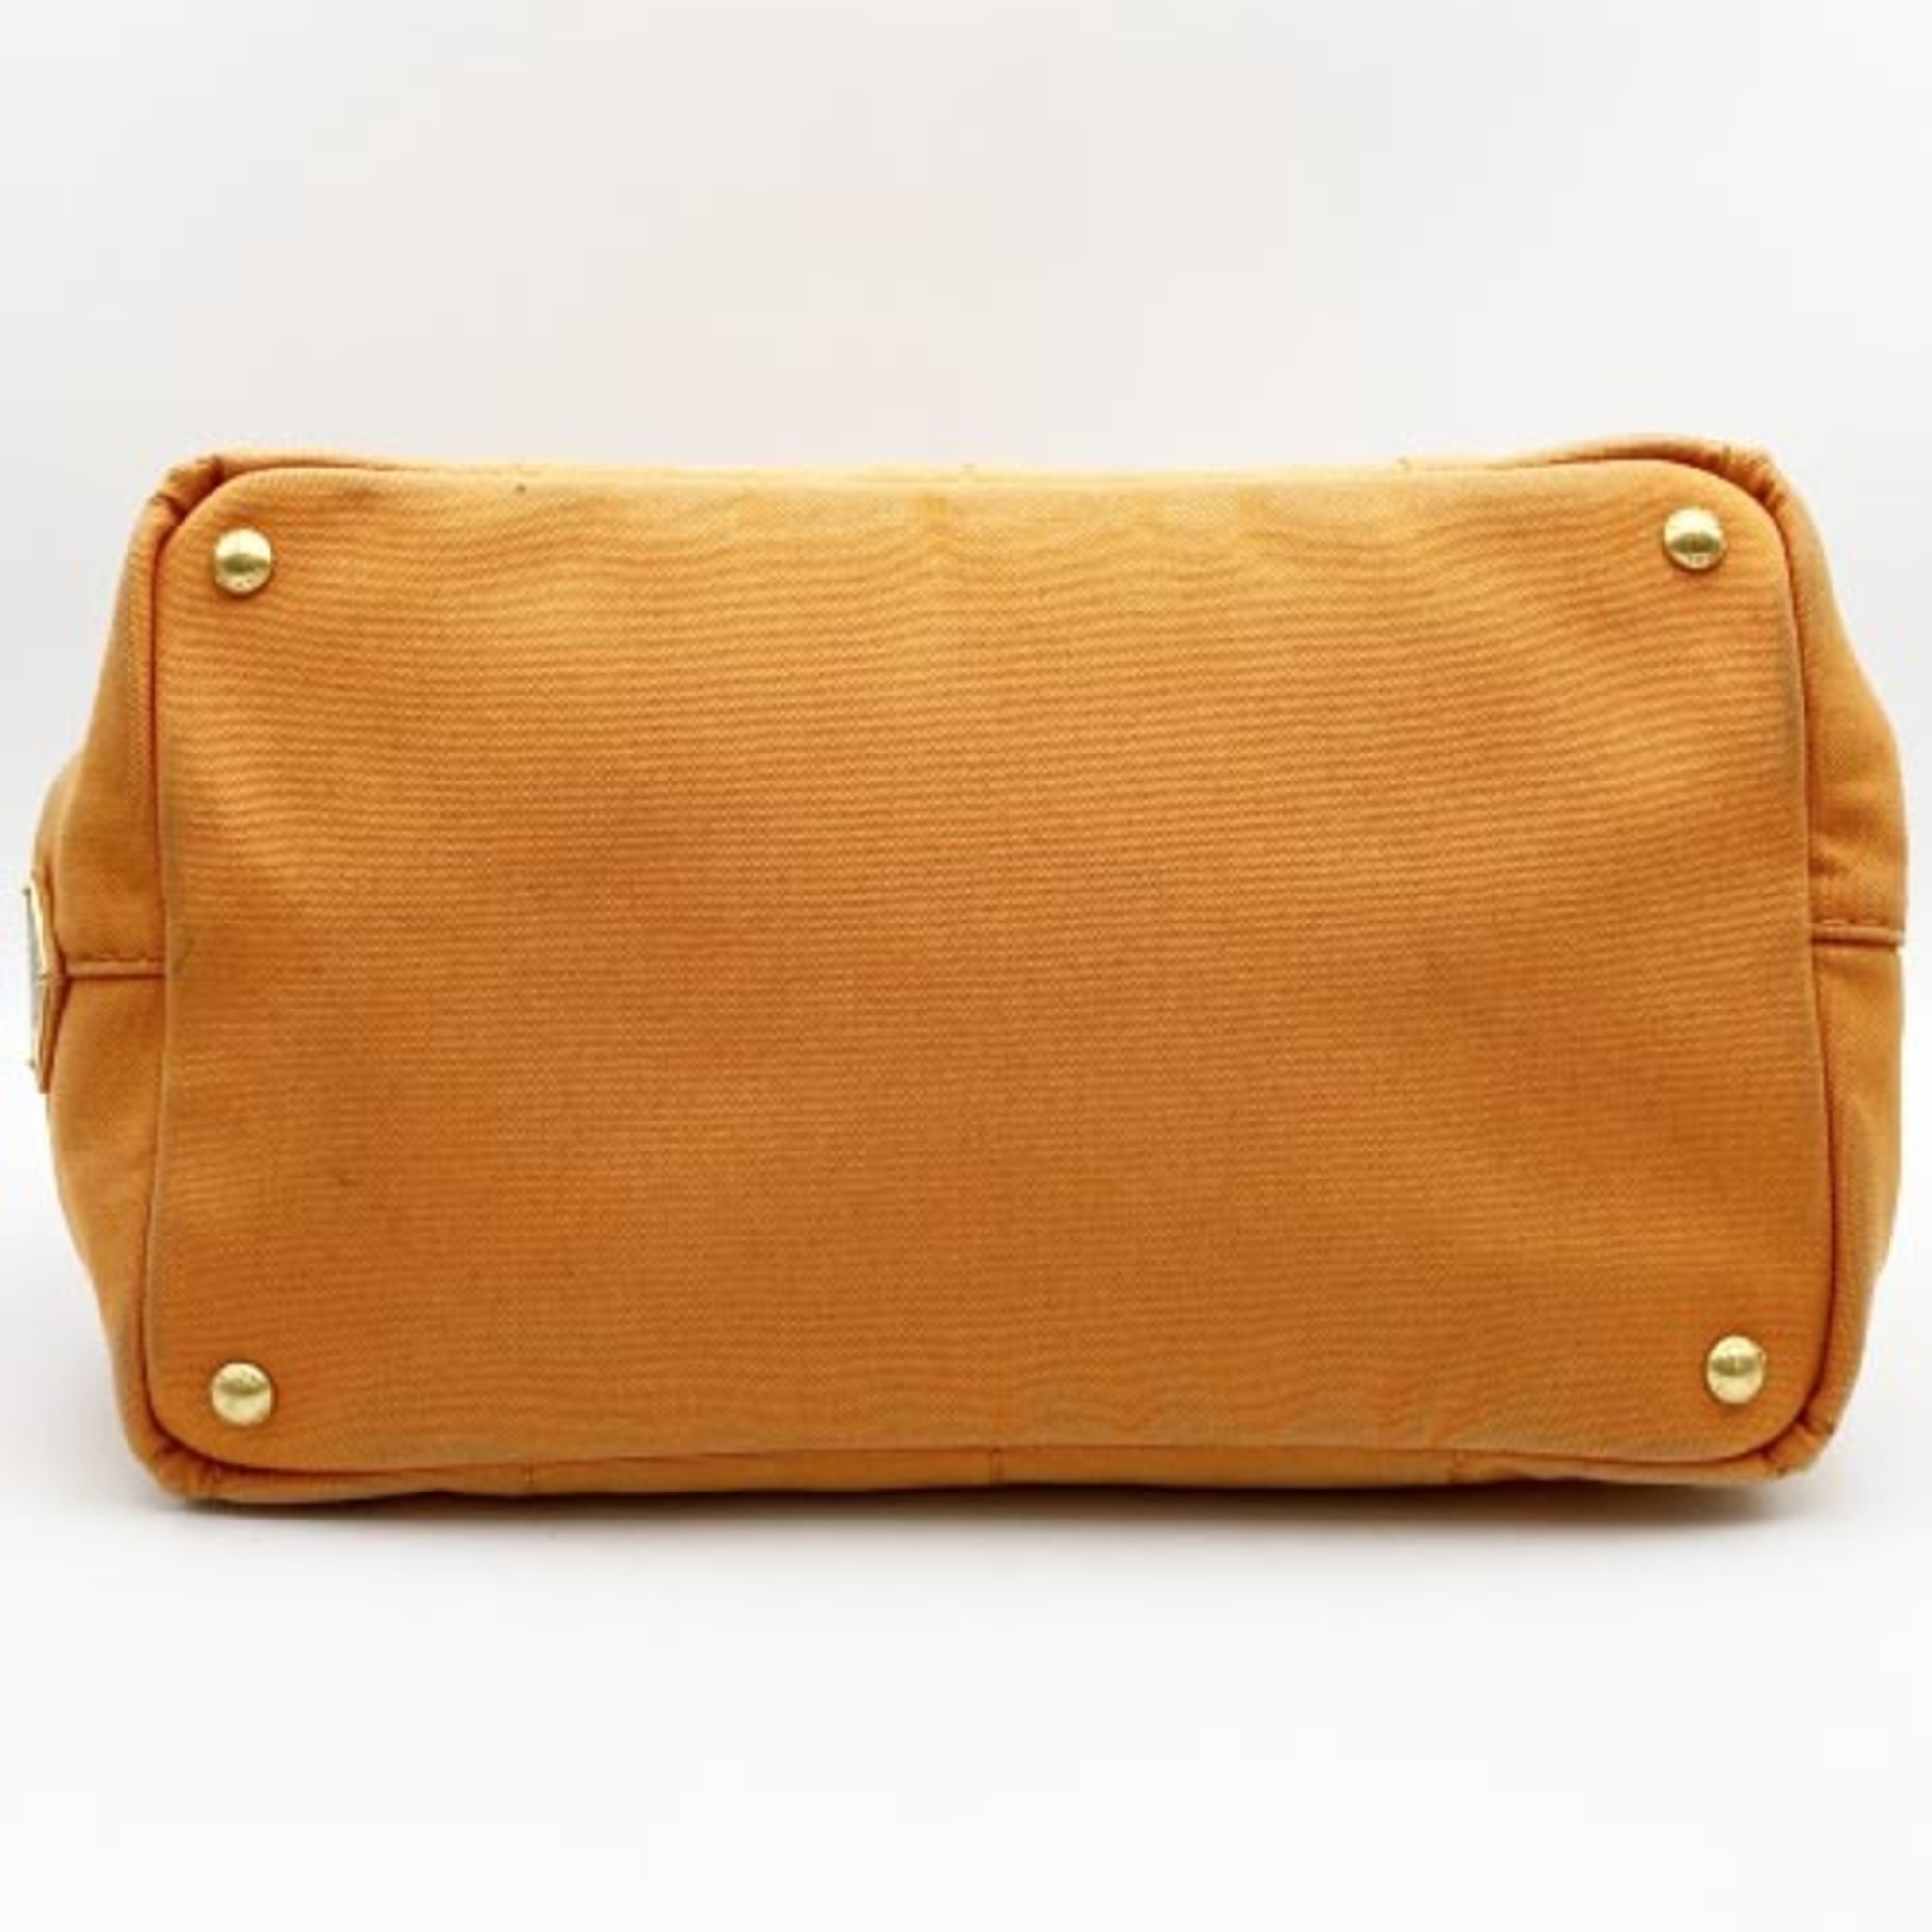 PRADA BN1877 Handbag Tote Bag Canapa Triangle Plate Orange Canvas Women's Fashion